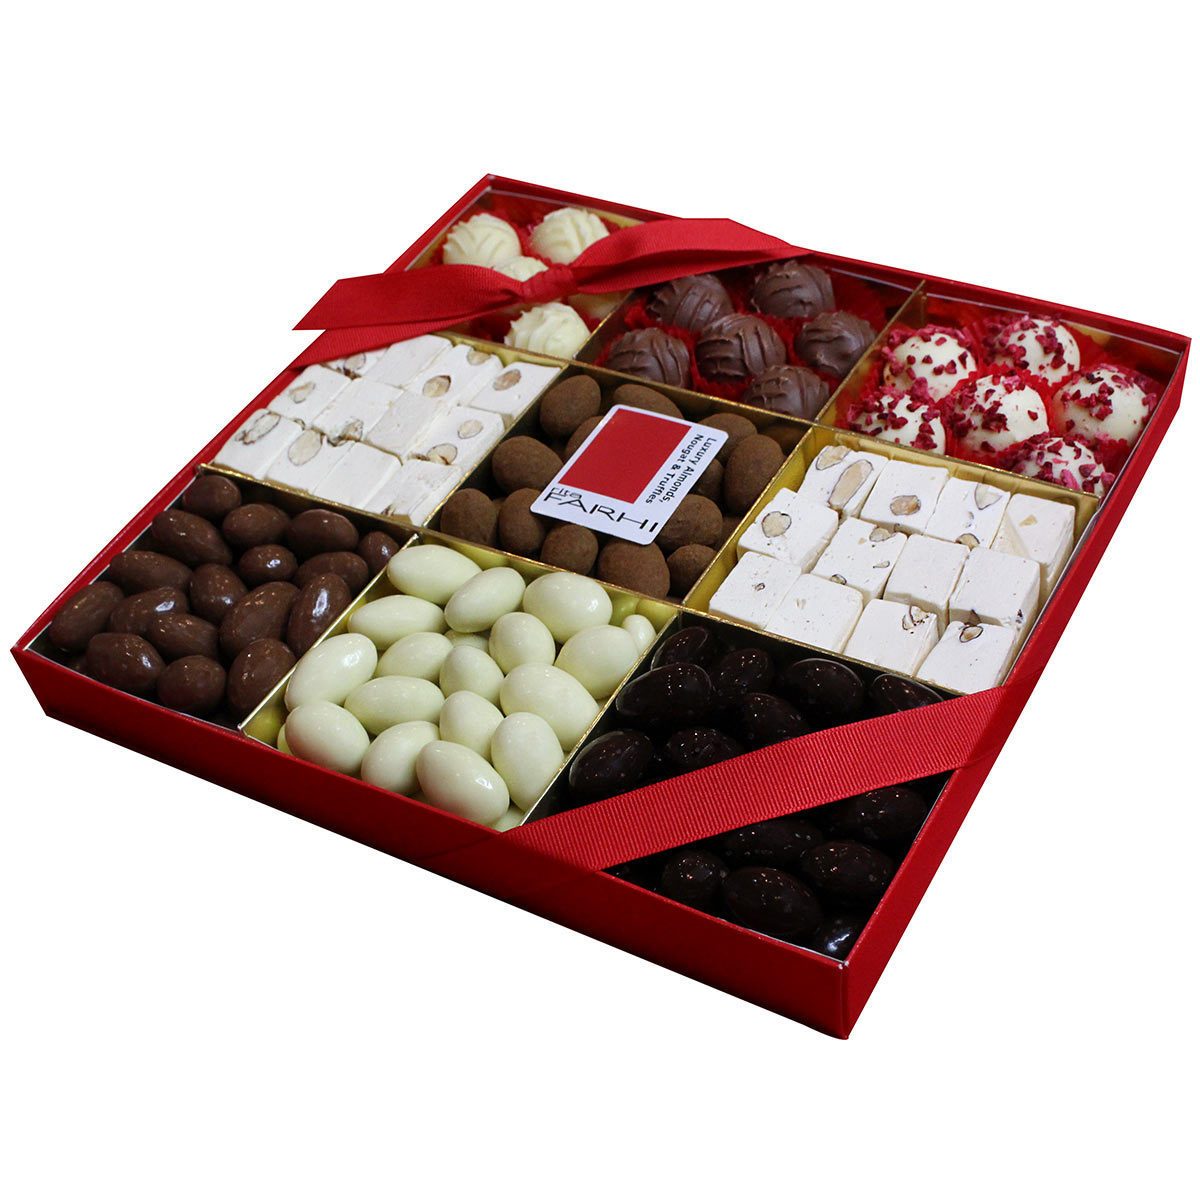 Rita Farhi Luxury Chocolate Almond, Truffles & Nougat Selection Tray, 1.056kg Snacks Costco UK   